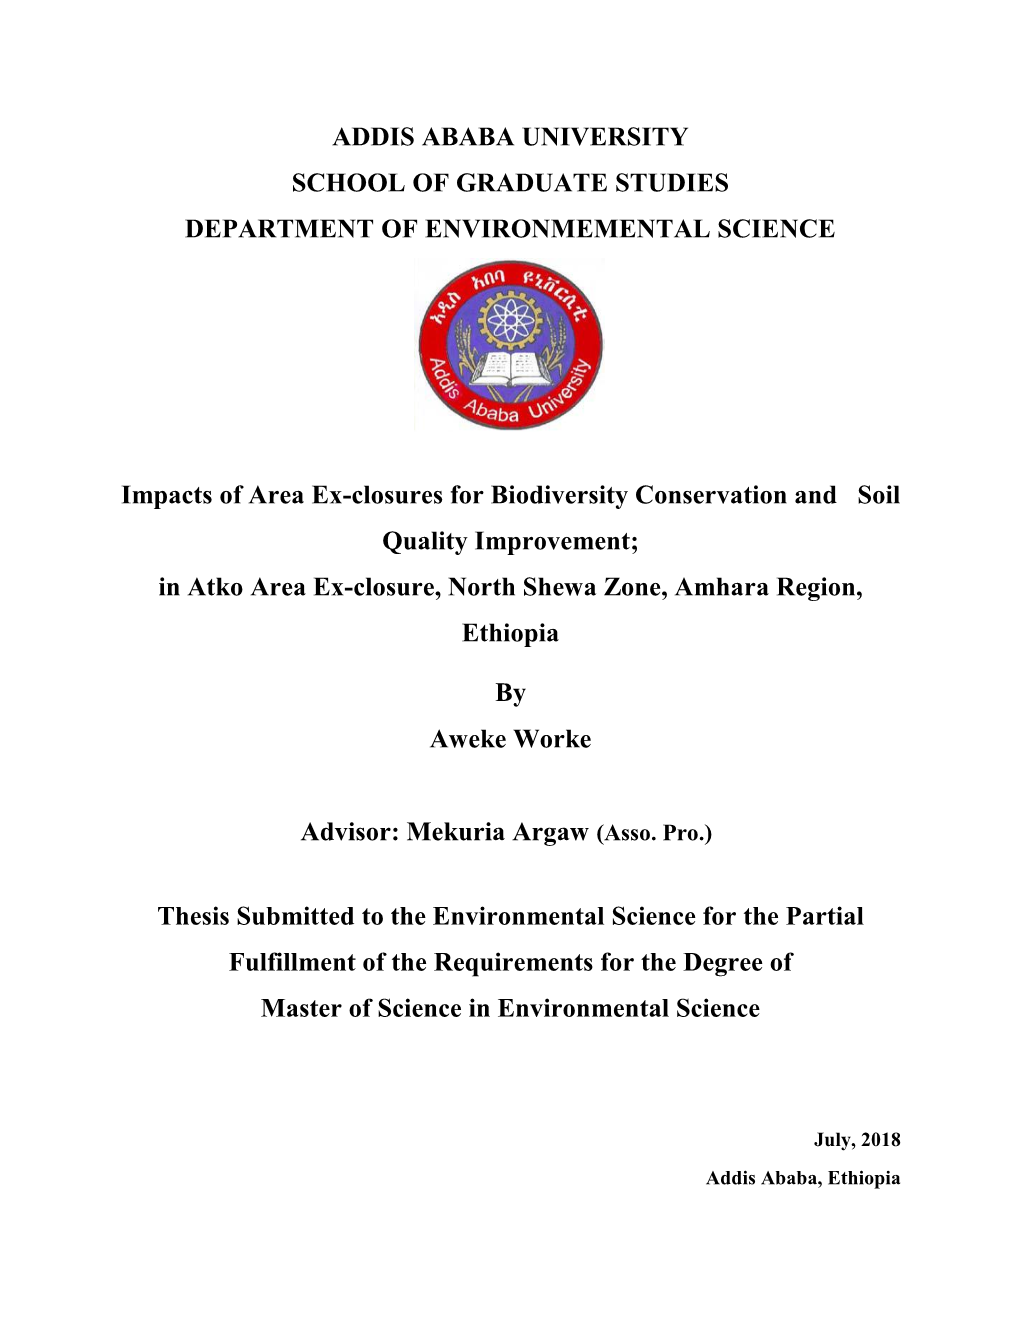 ADDIS ABABA UNIVERSITY SCHOOL of GRADUATE STUDIES DEPARTMENT of ENVIRONMEMENTAL SCIENCE Impacts of Area Ex-Closures for Biodiver